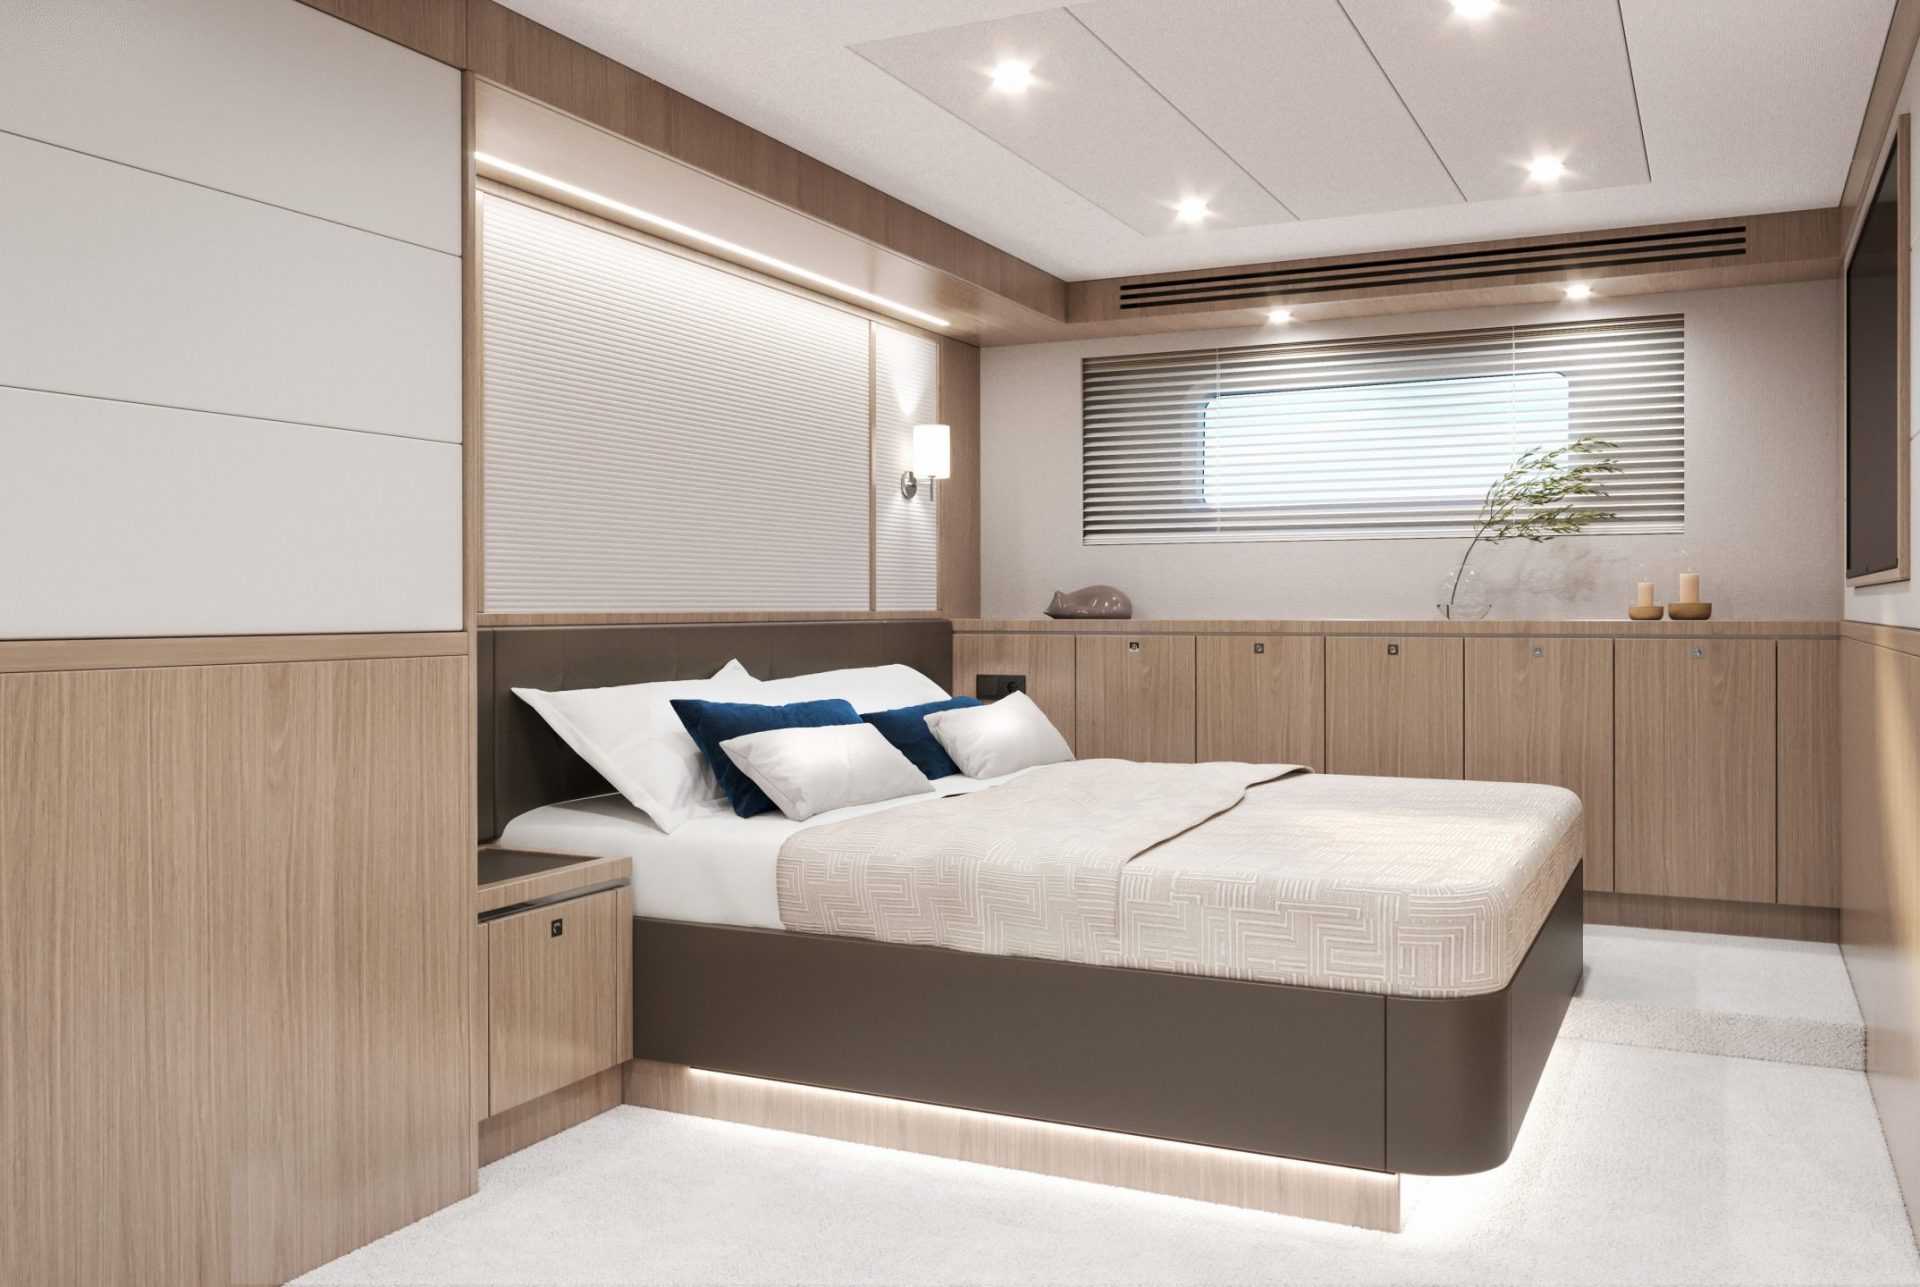 Luxury tawler yacht interior